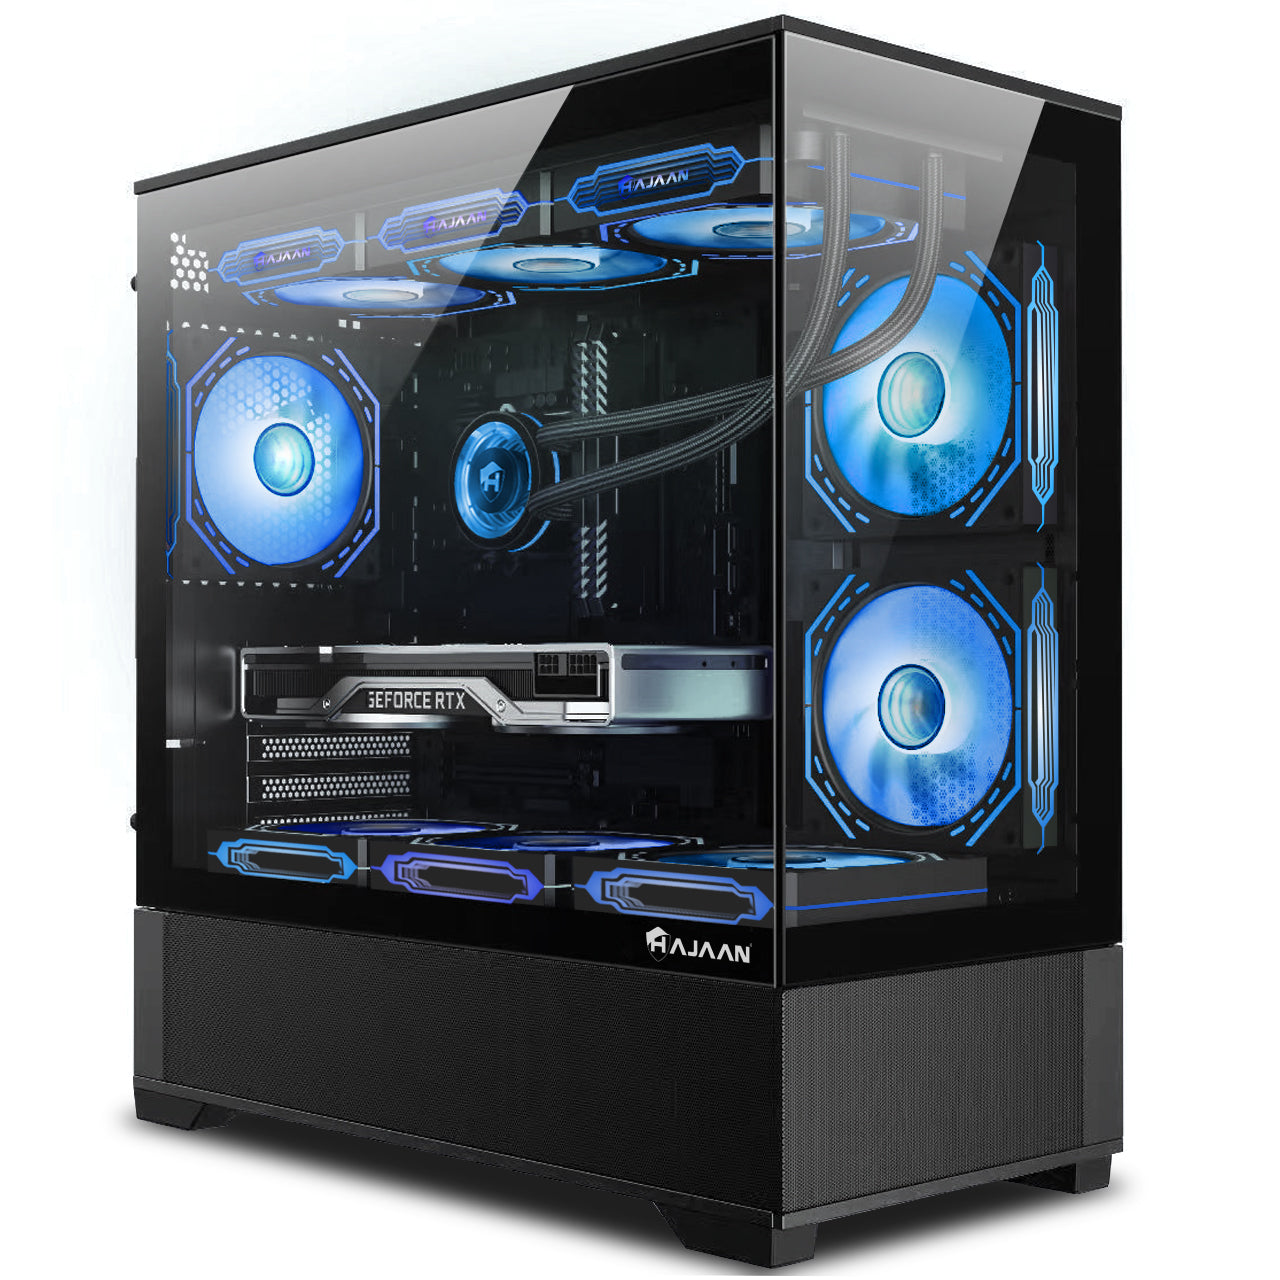 HAJAAN SuperX Windows 11 Pro Gaming PC | Liquid Cooled | GeForce RTX Series Graphics | AMD Ryzen 7 5800X | 32GB DDR4 | 1TB NVMe SSD | WiFi | Bluetooth | Mechanical Keyboard Mouse